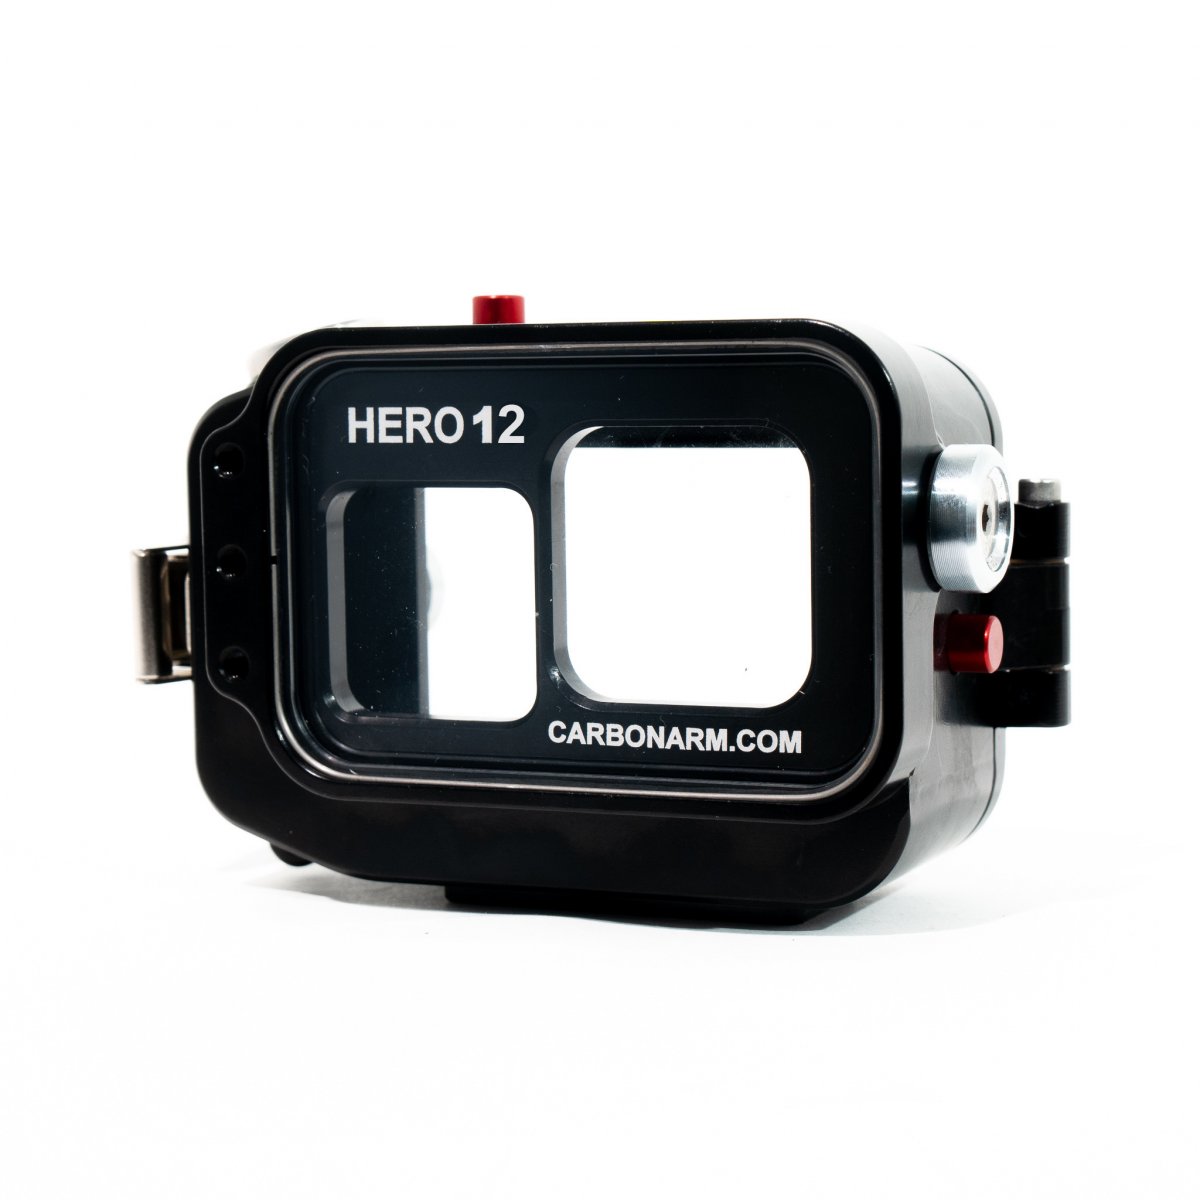 Carcasa Protectora Submarina GoPro Hero 5 6 7 8 9 10 11 12